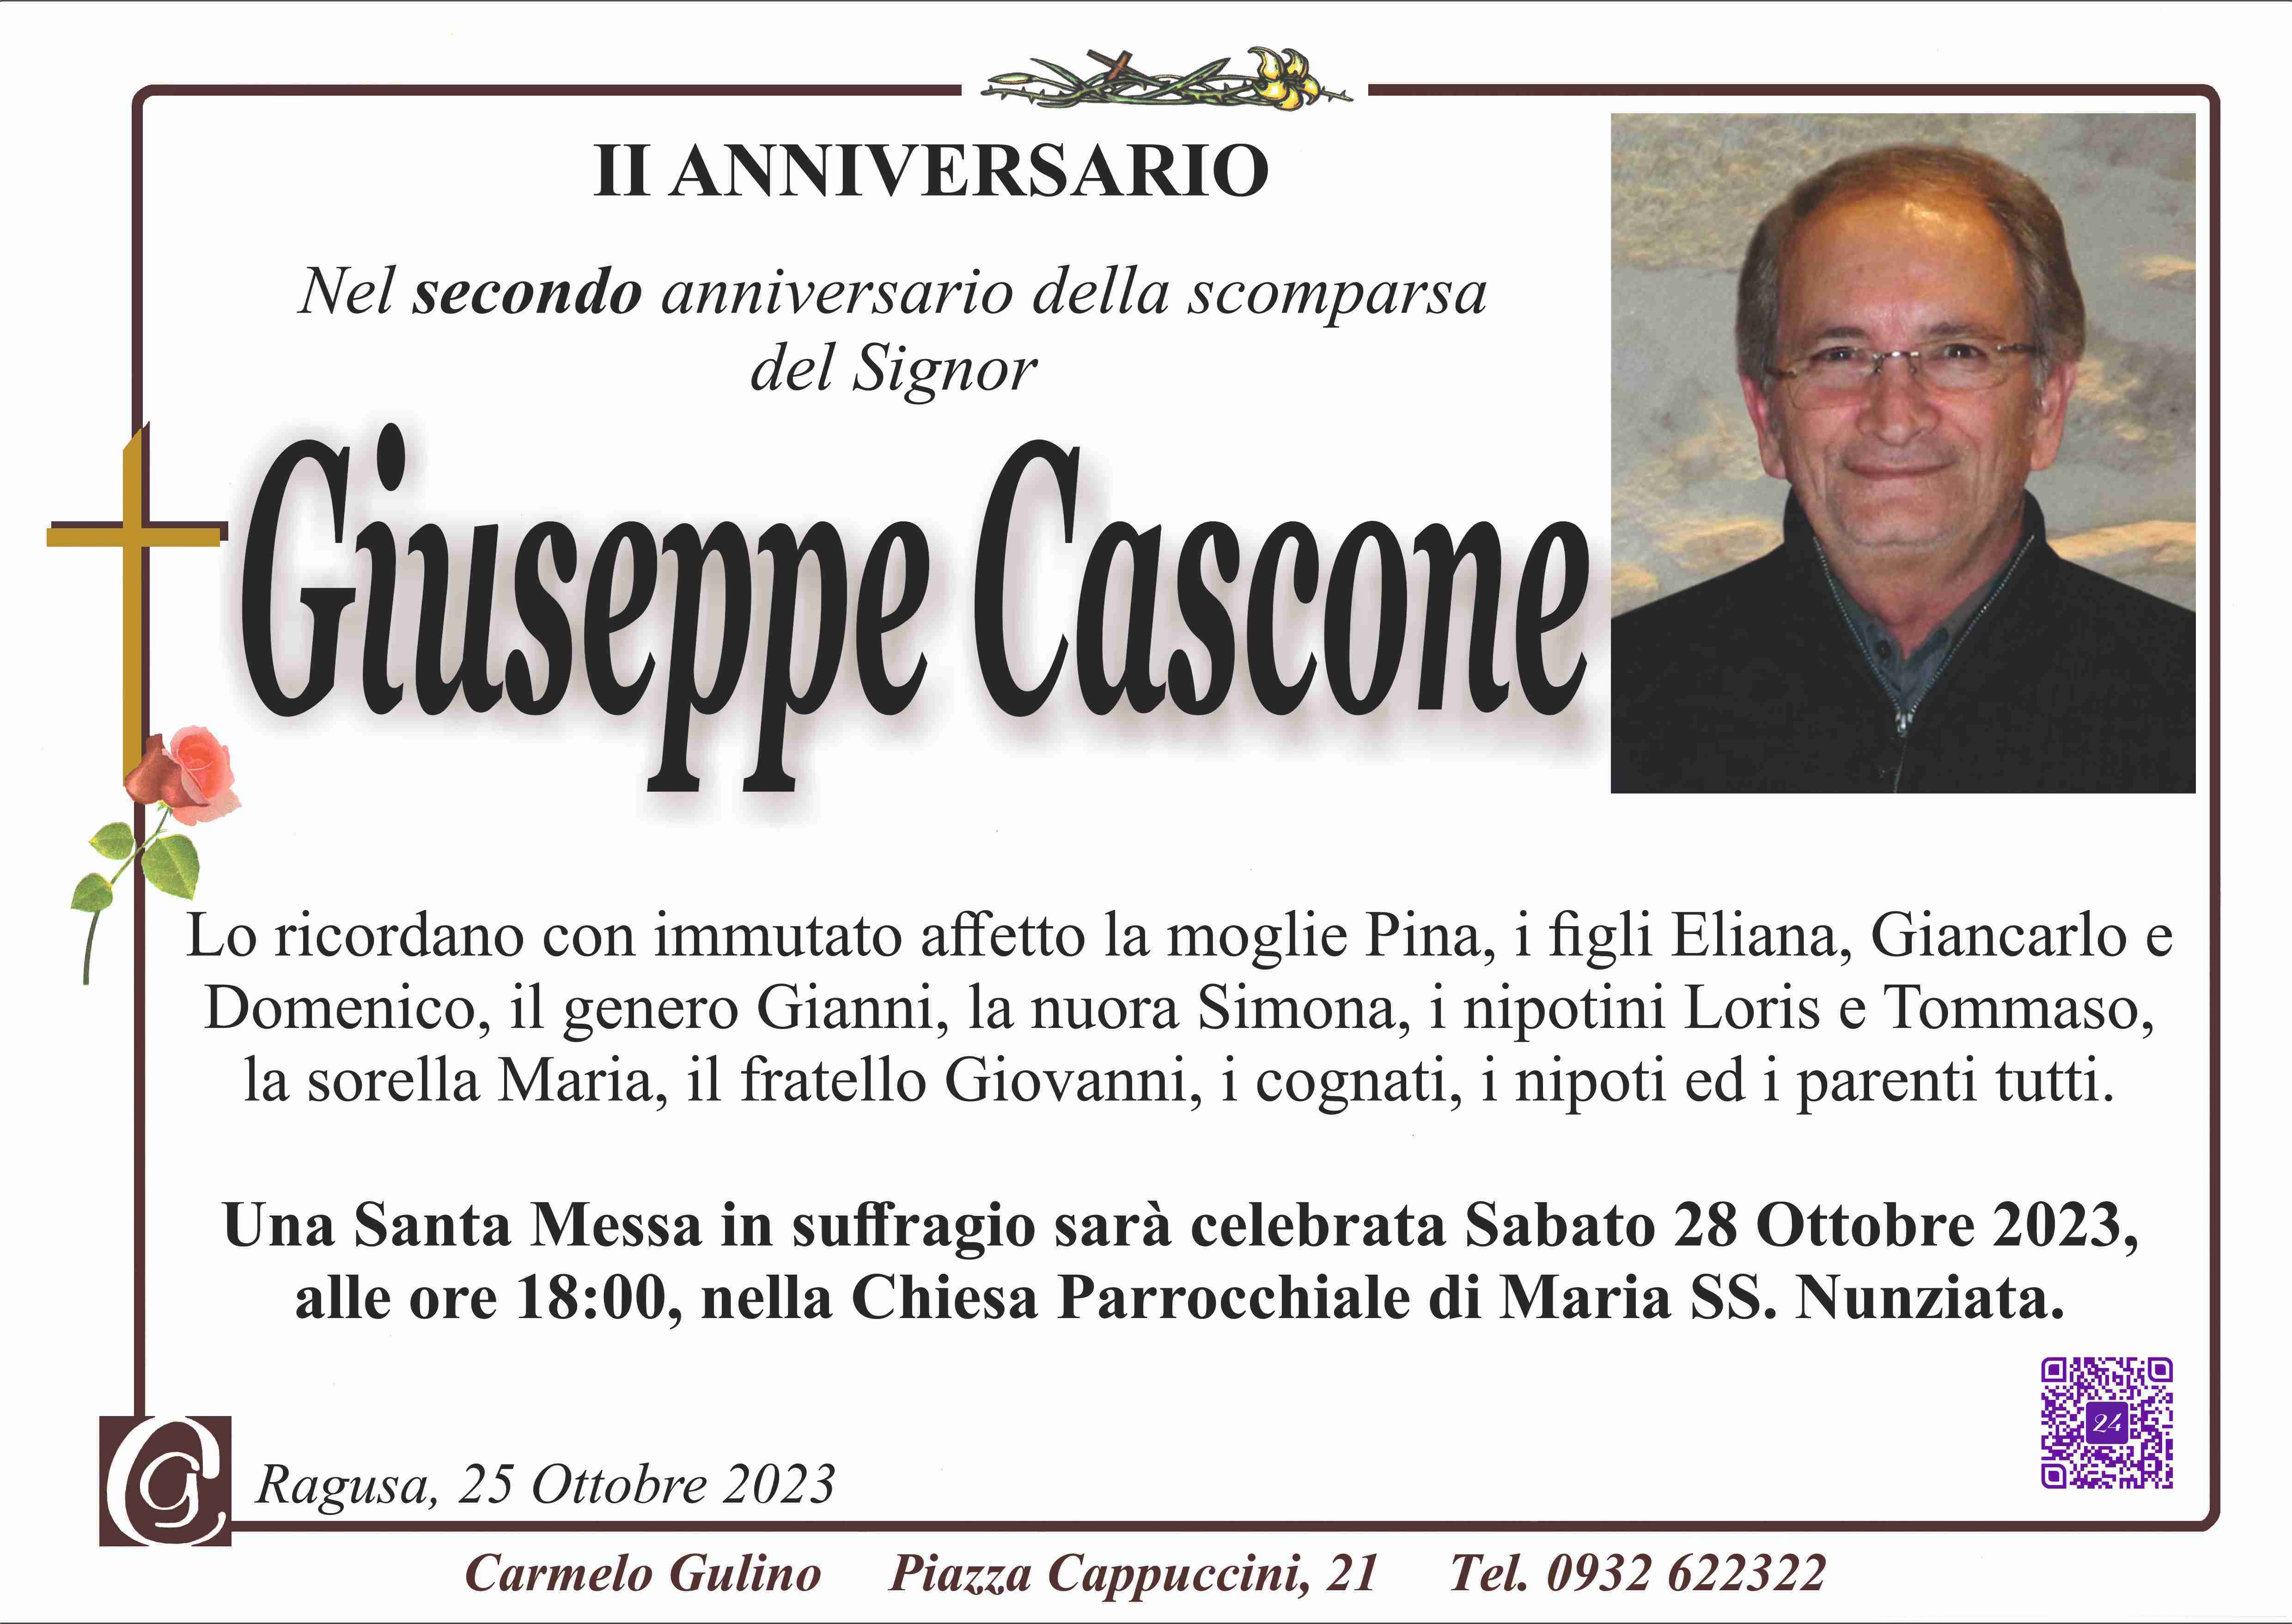 Giuseppe Cascone